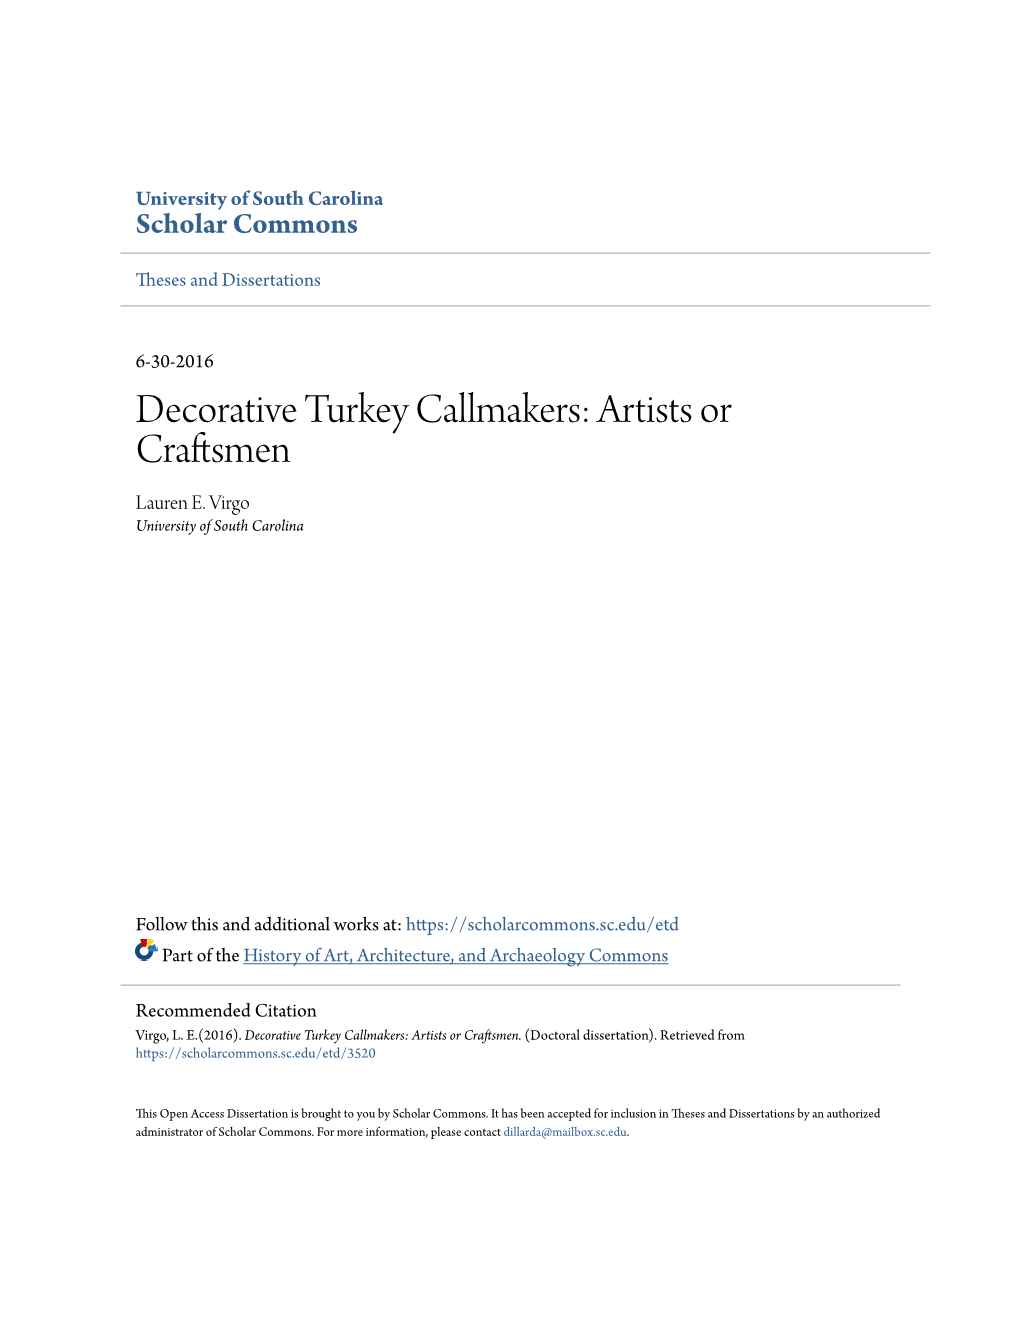 Decorative Turkey Callmakers: Artists Or Craftsmen Lauren E